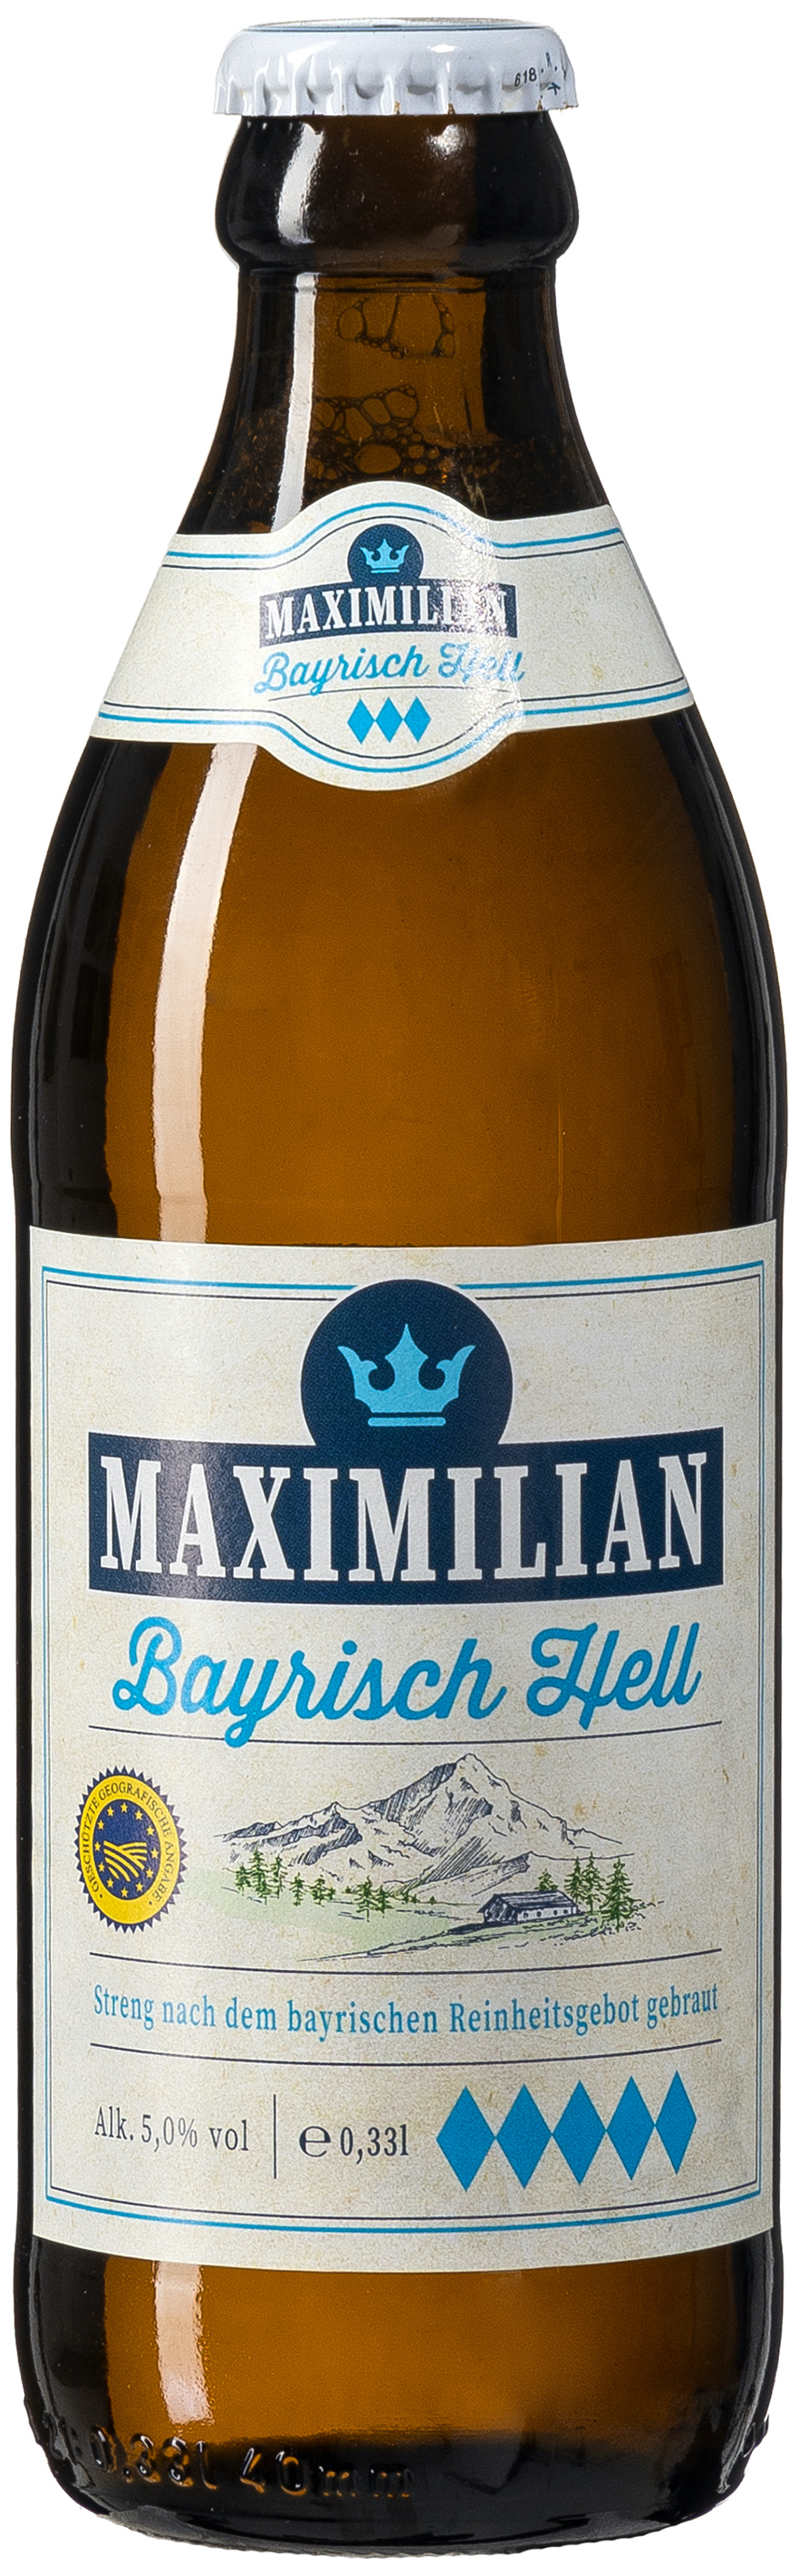 Maximilian Bayrisch hell 0,33L MEHRWEG